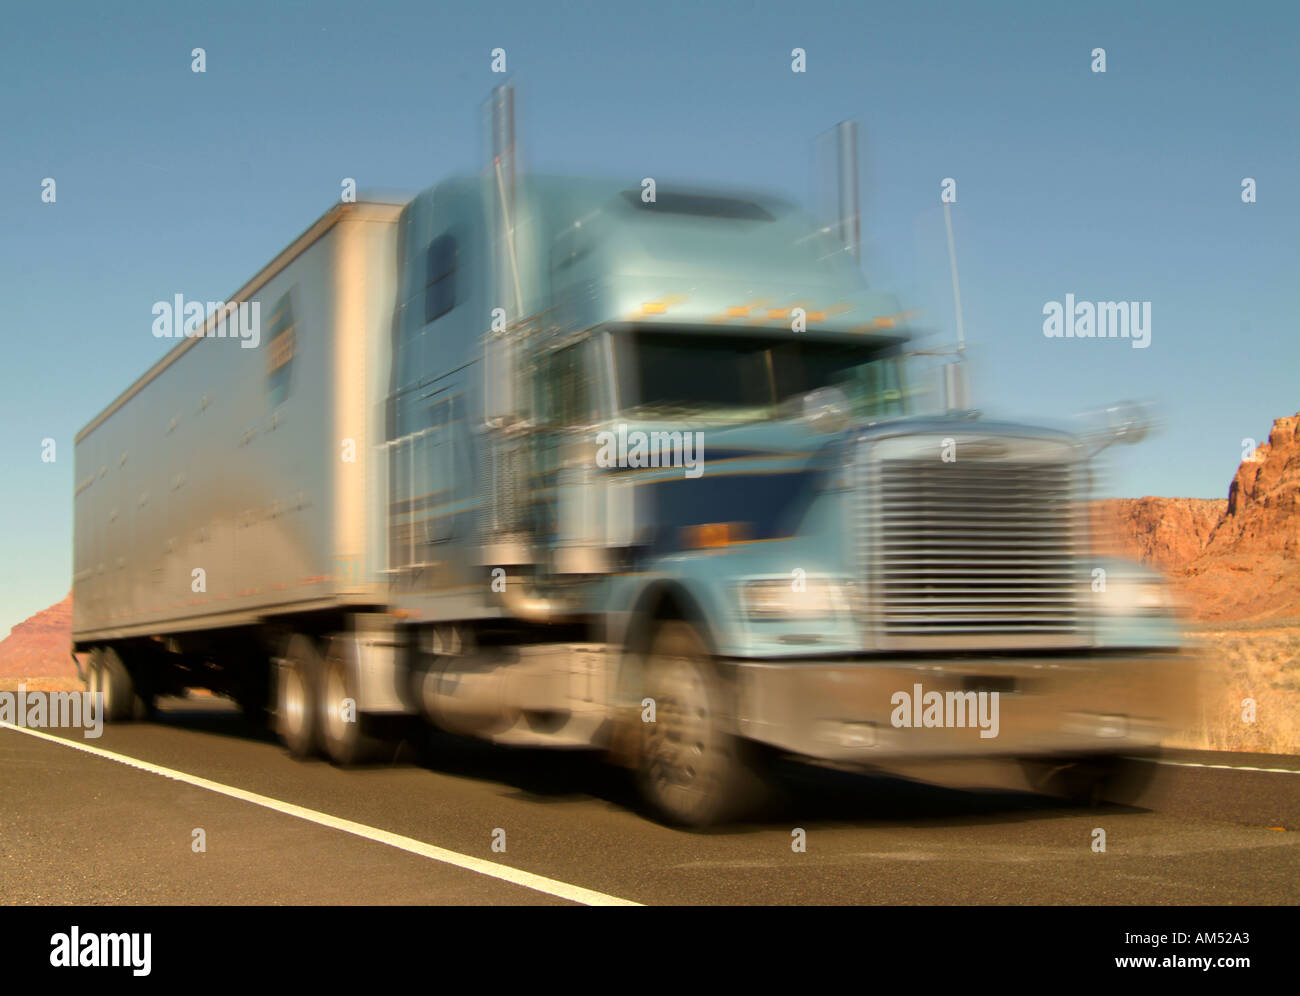 Un grande 18 wheeler carrello sull'autostrada con sfocatura Foto Stock